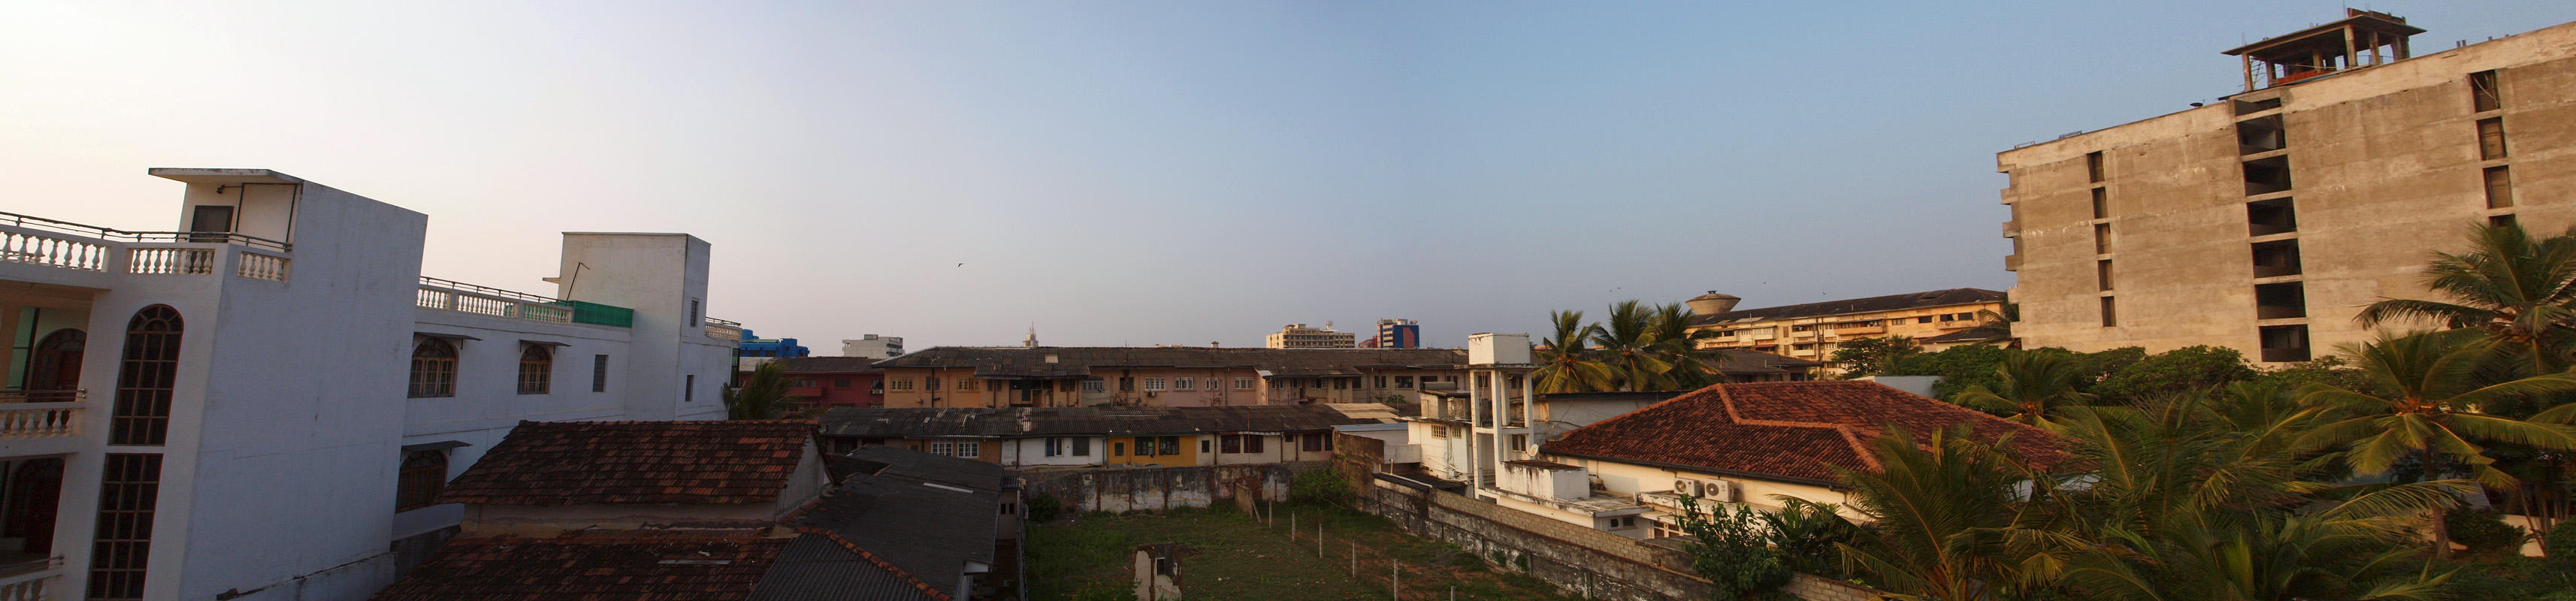 Panorama - View from Nirmala